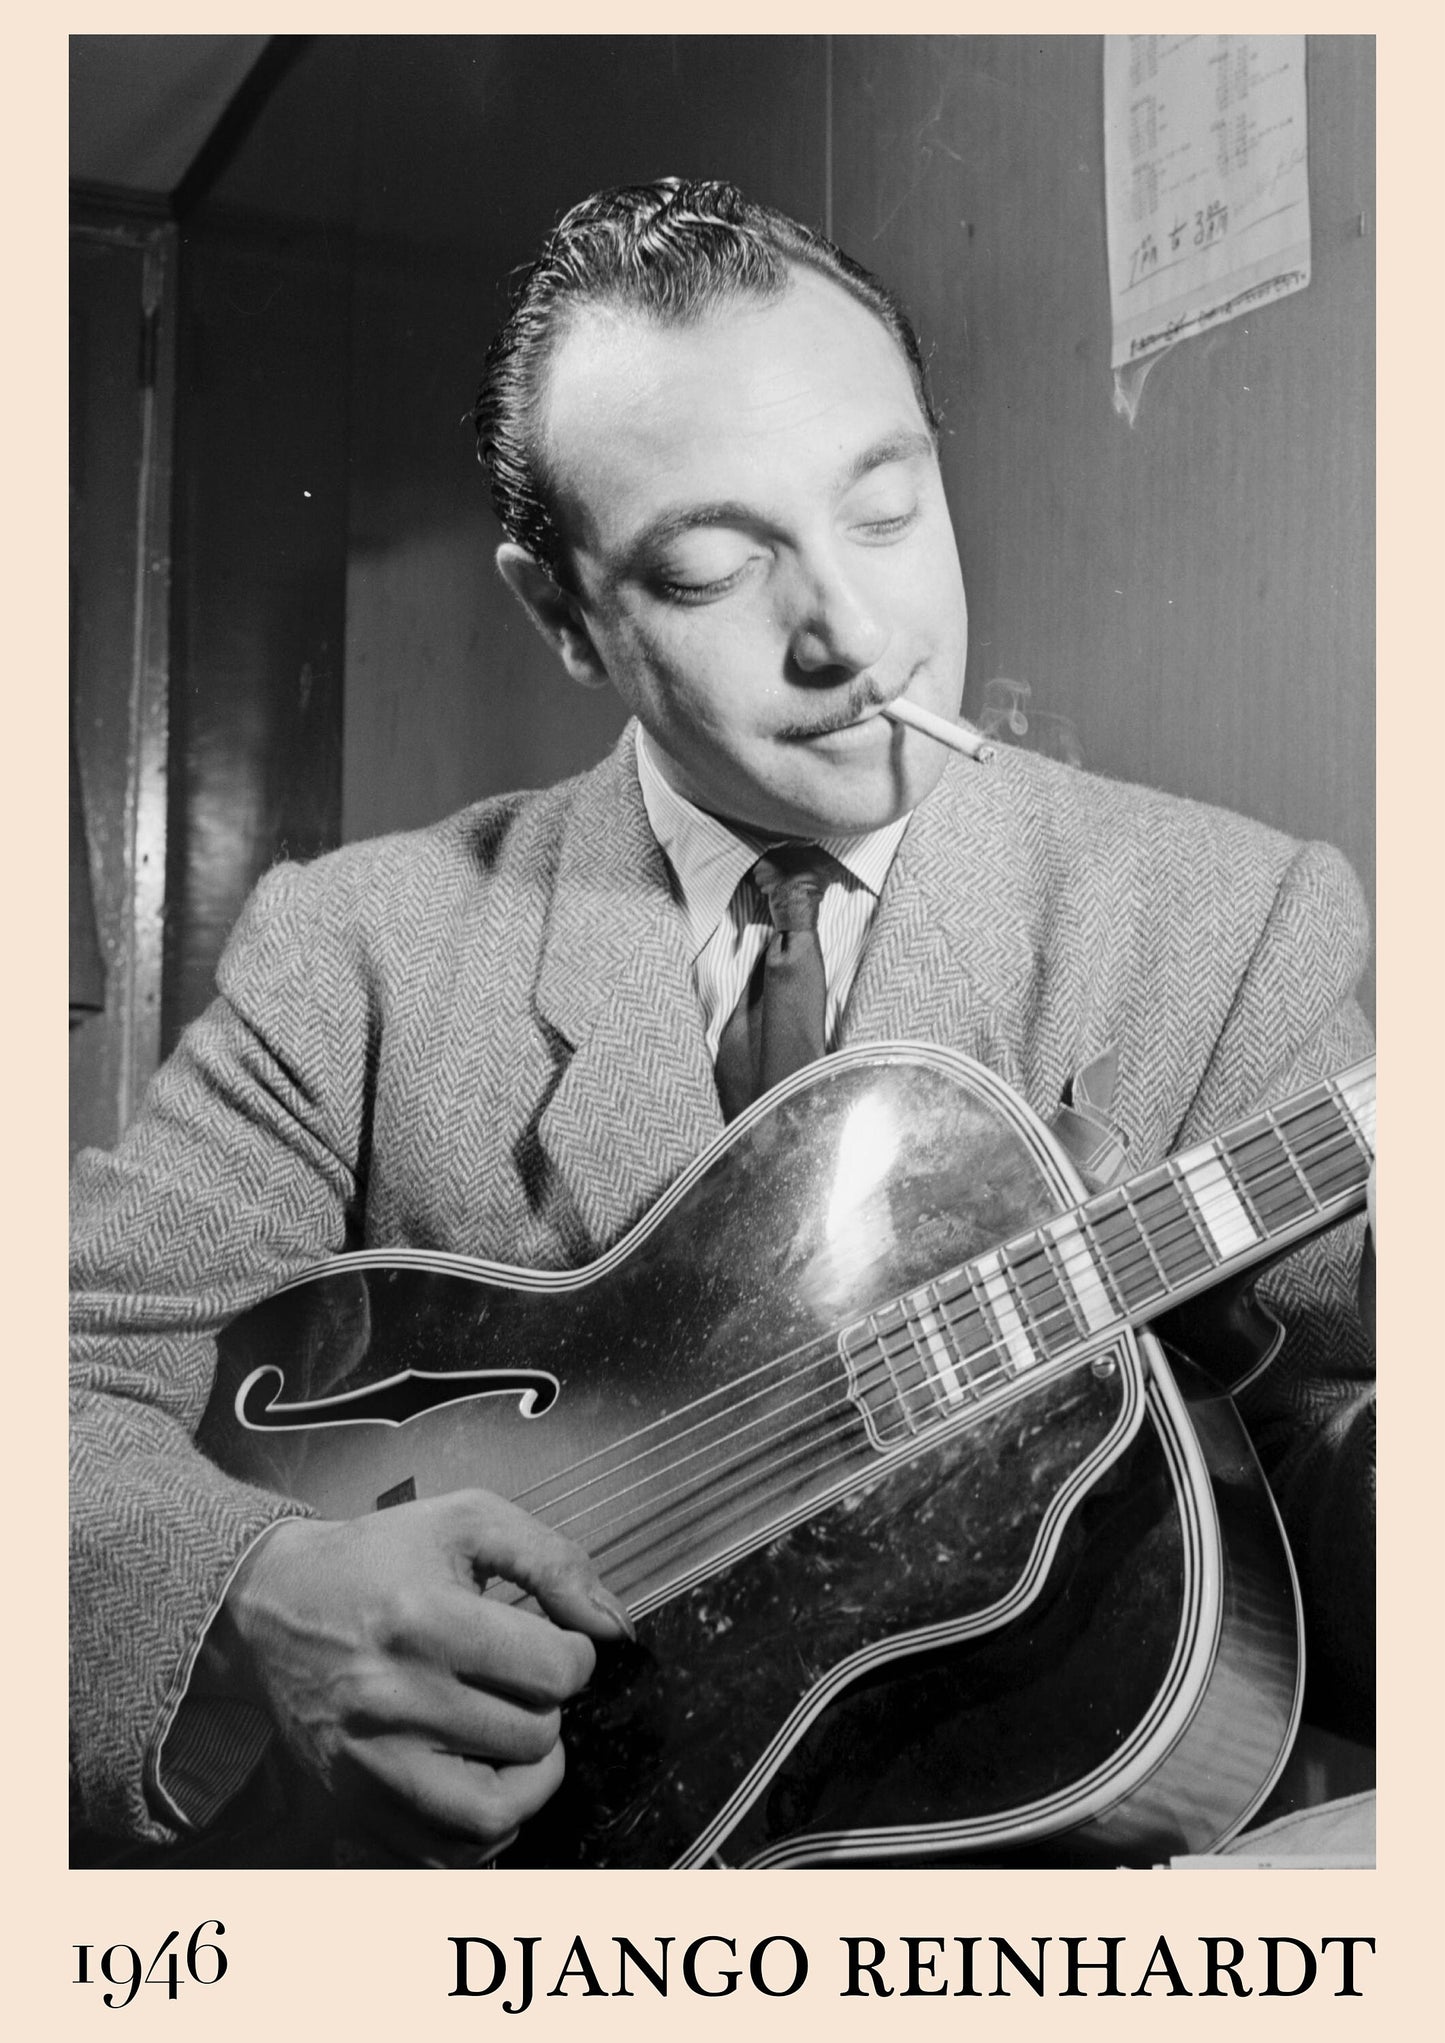 1946 photograph of Django Reinhardt playing the guitar. Transformed into a retro jazz poster